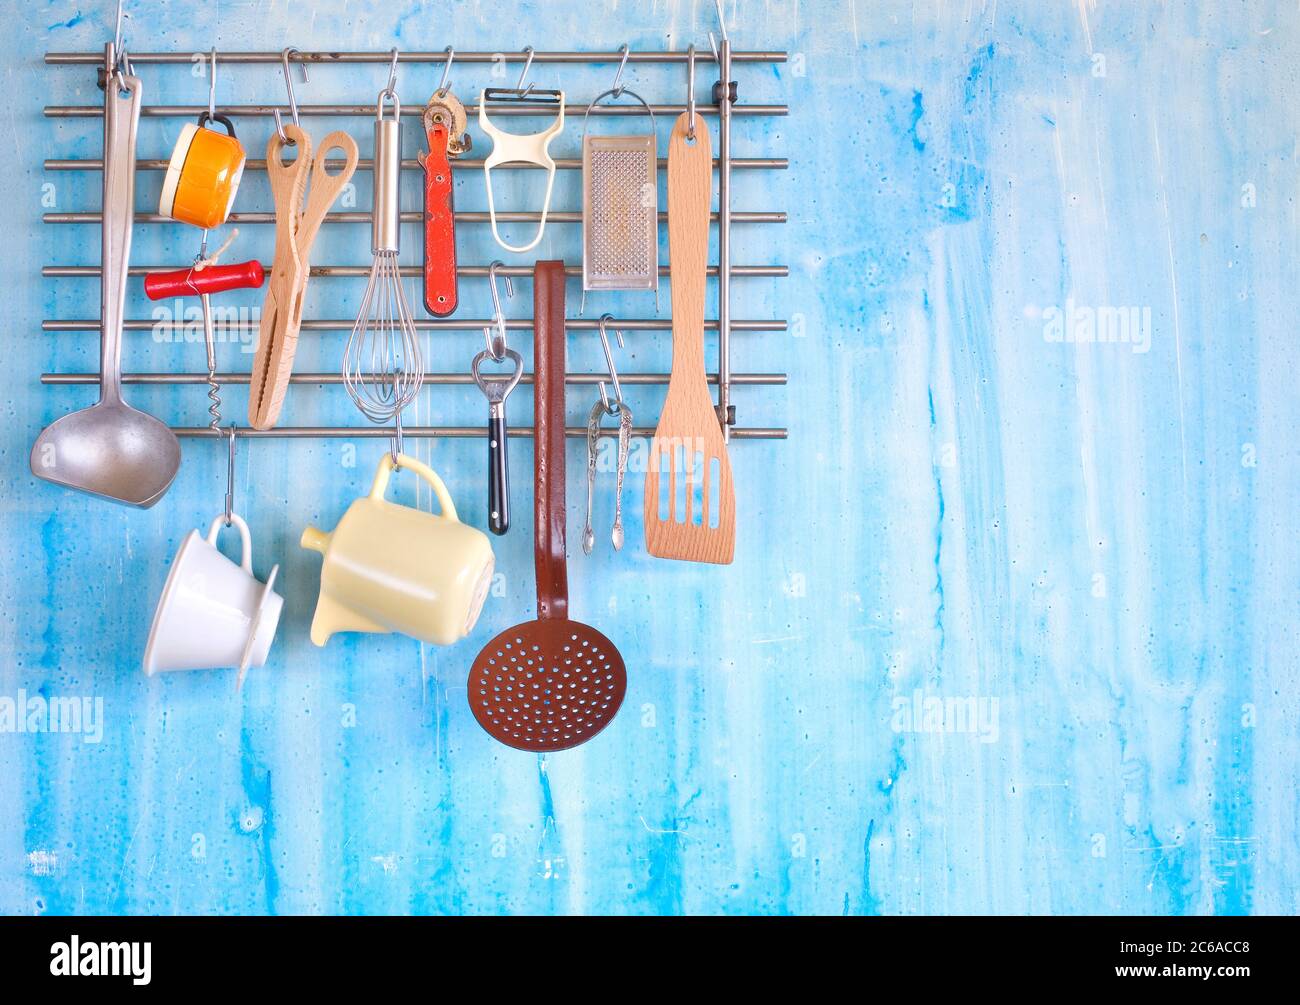 vintage kitchen utensils, free copy space Stock Photo